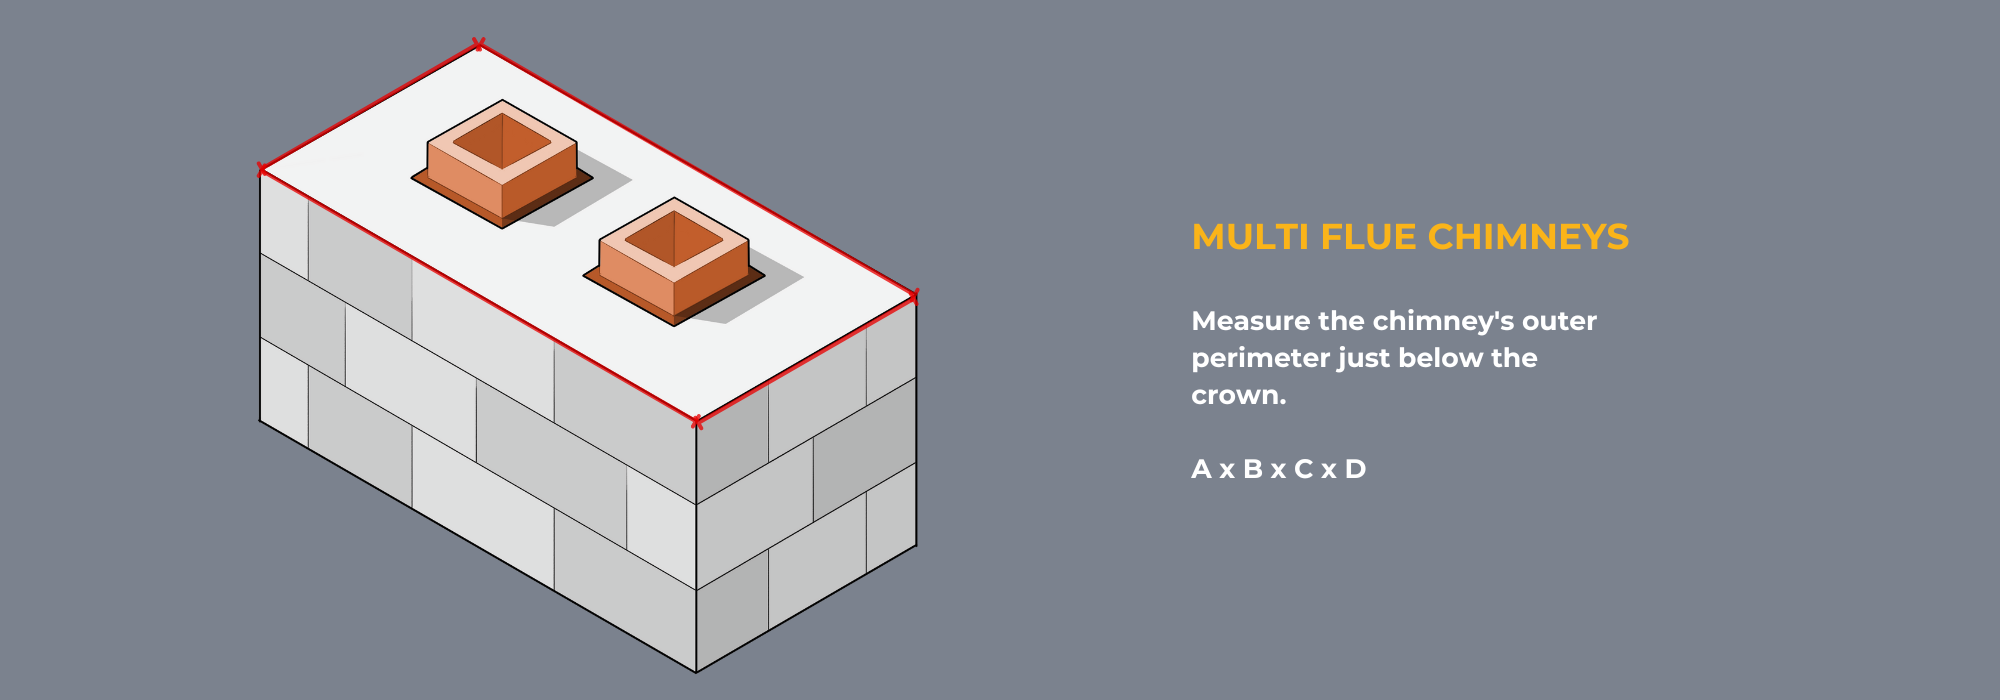 How to measure for multi flue chimney